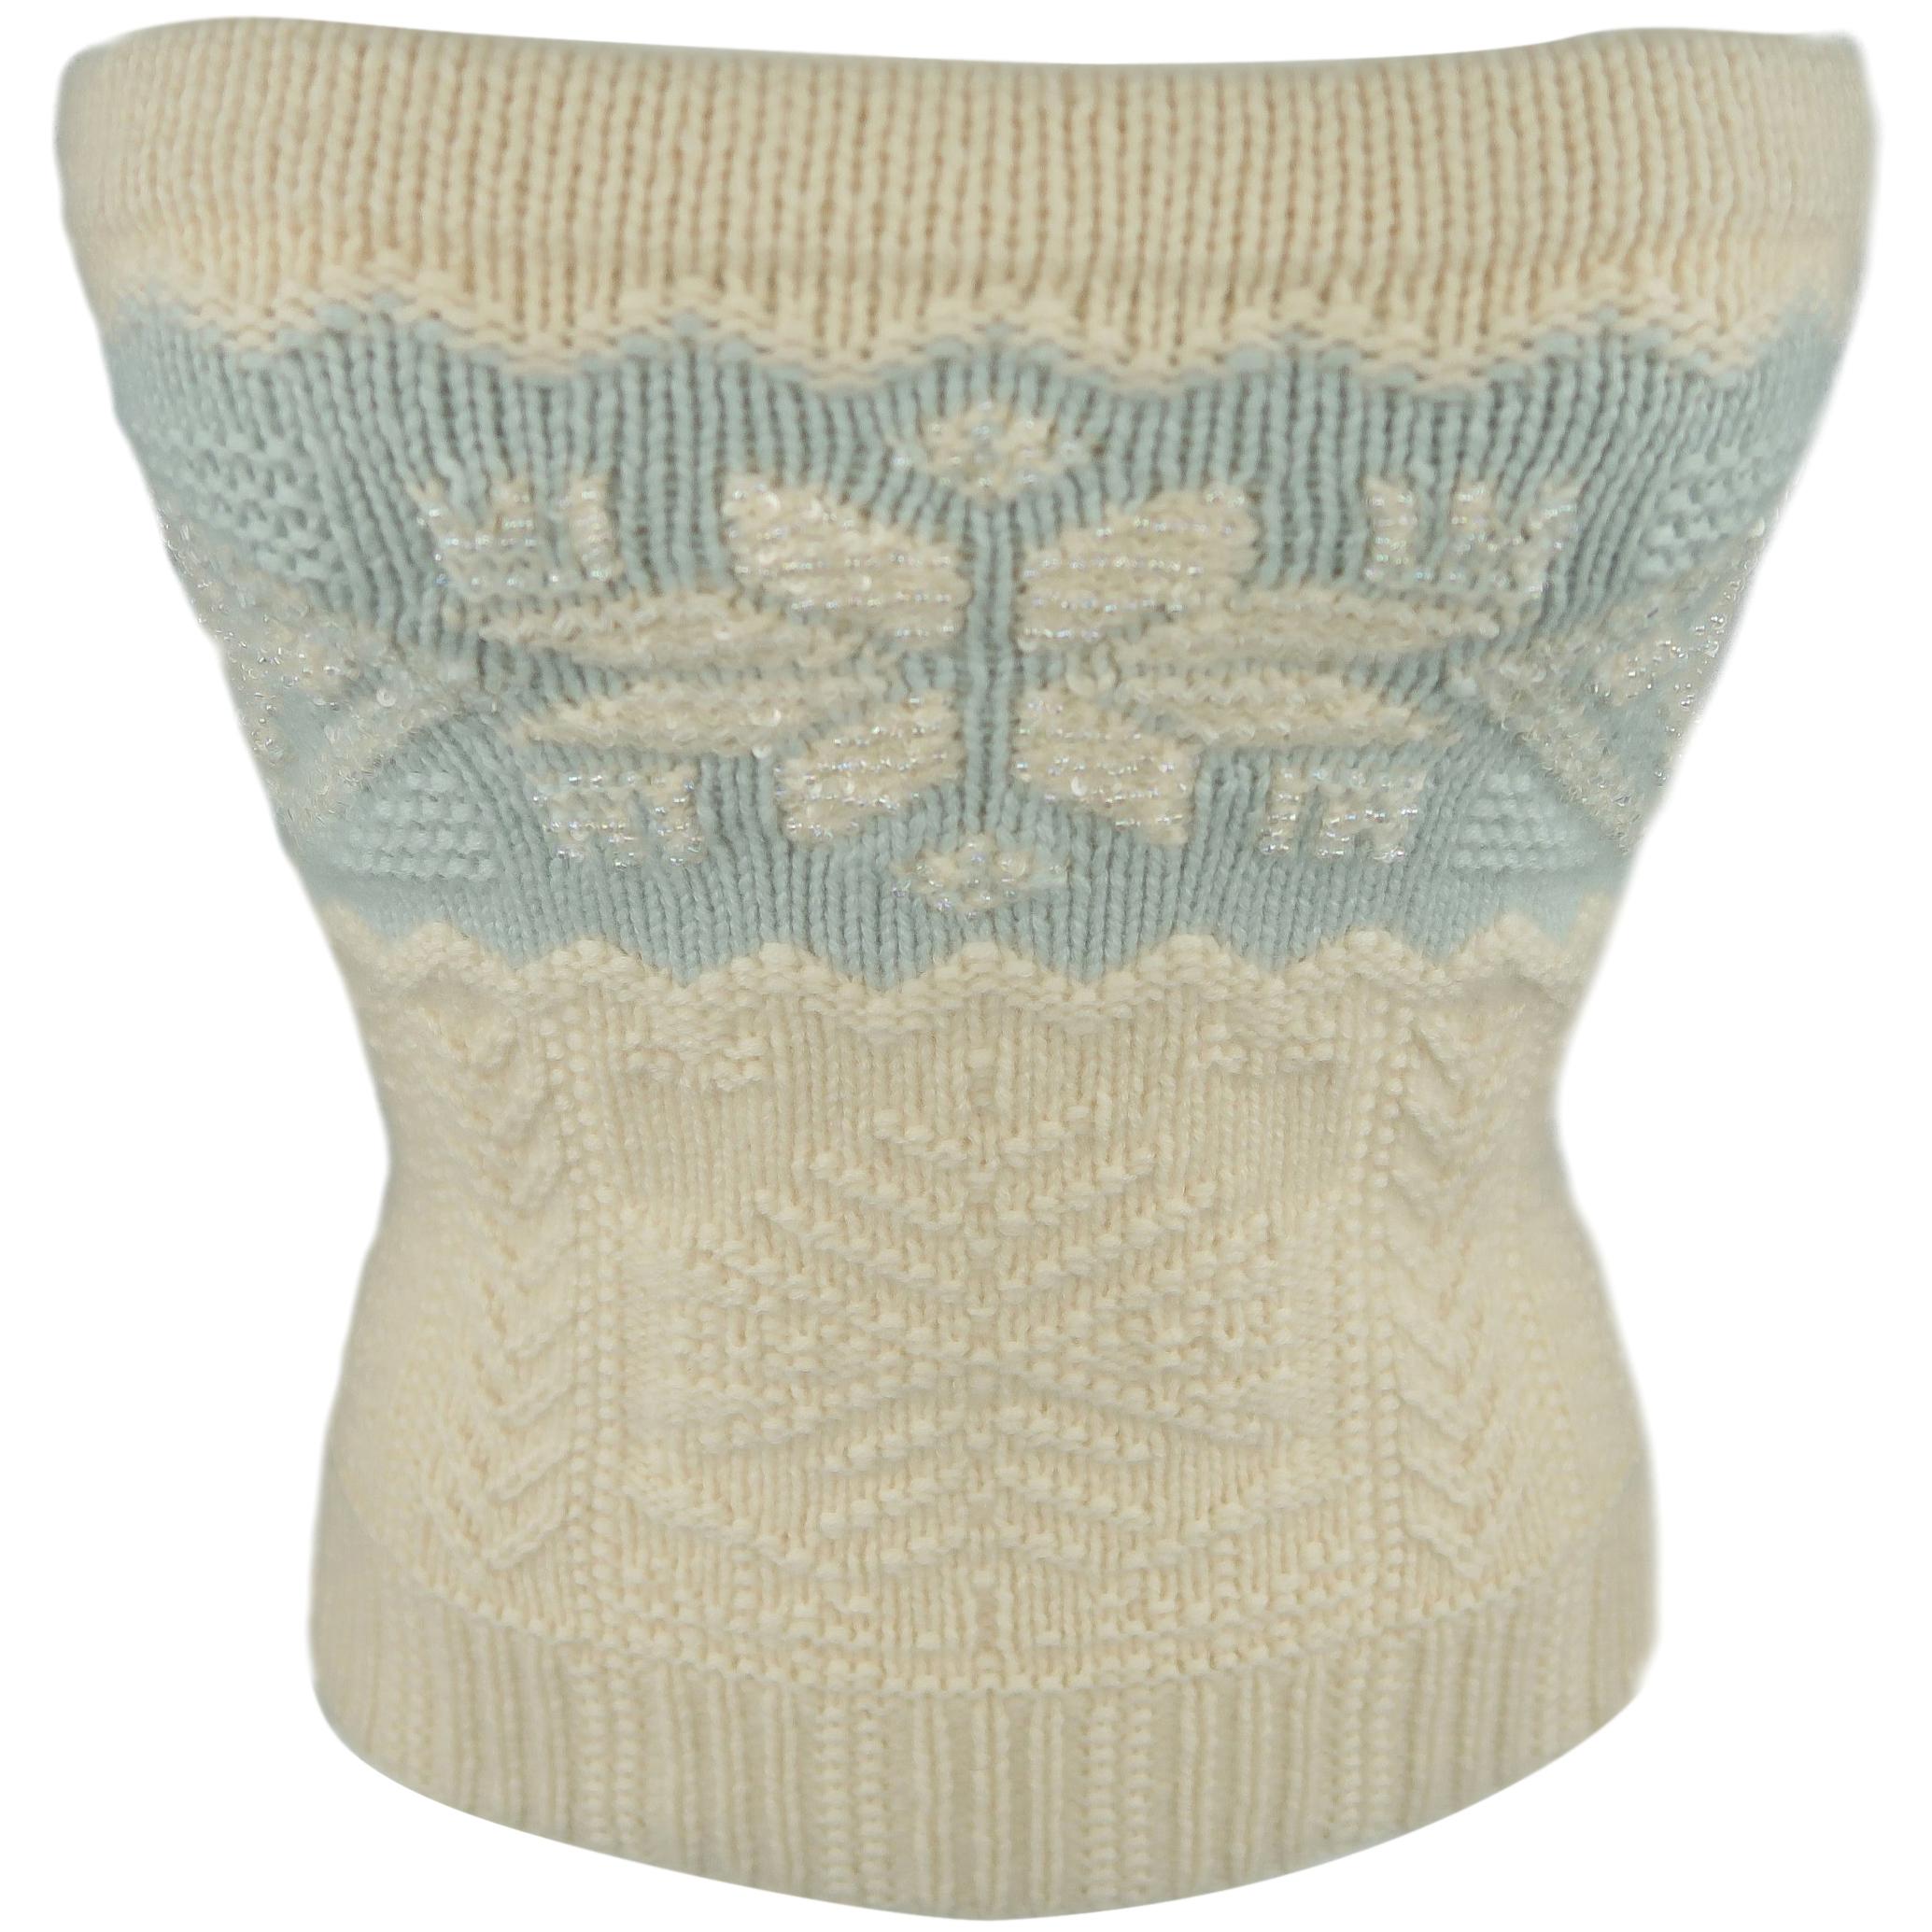 RALPH LAUREN Size M Cream & Blue Beaded Cashmere Knit Snowflake Tube Top